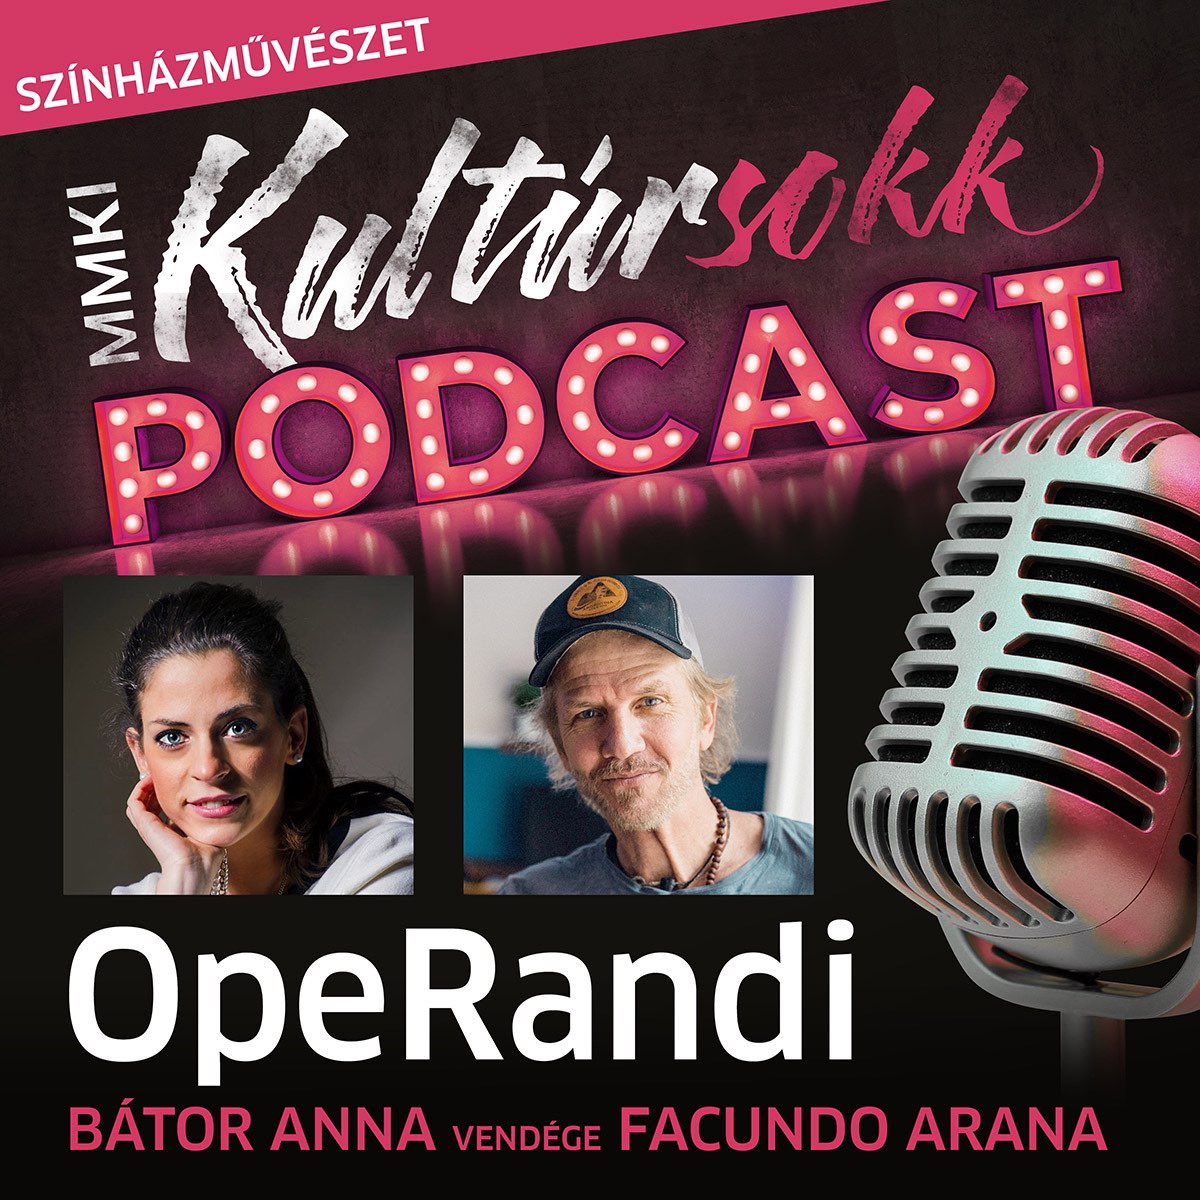 OpeRandi – Bátor Anna beszélget Facundo Arana-val